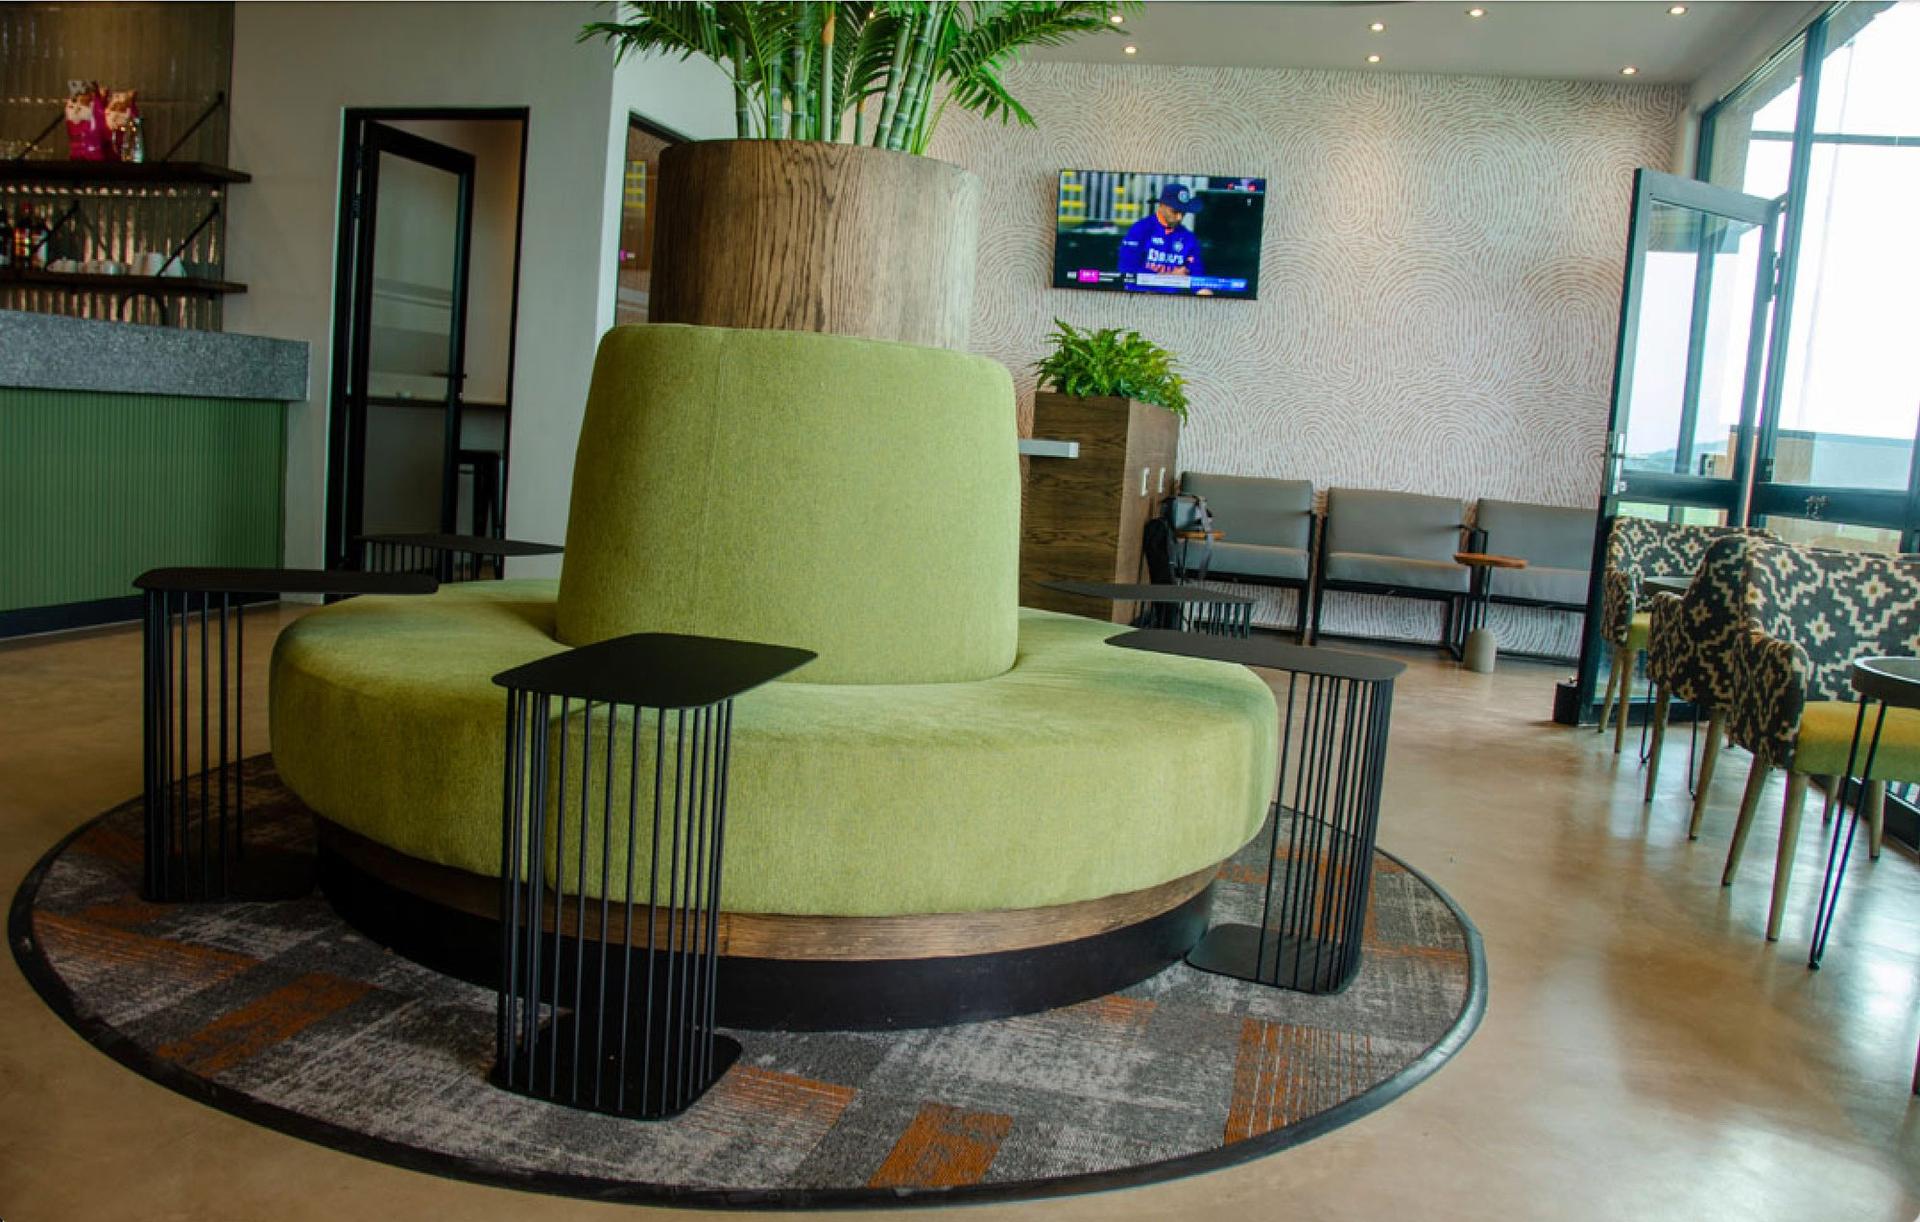 Bidvest Premier Lounge image 3 of 8